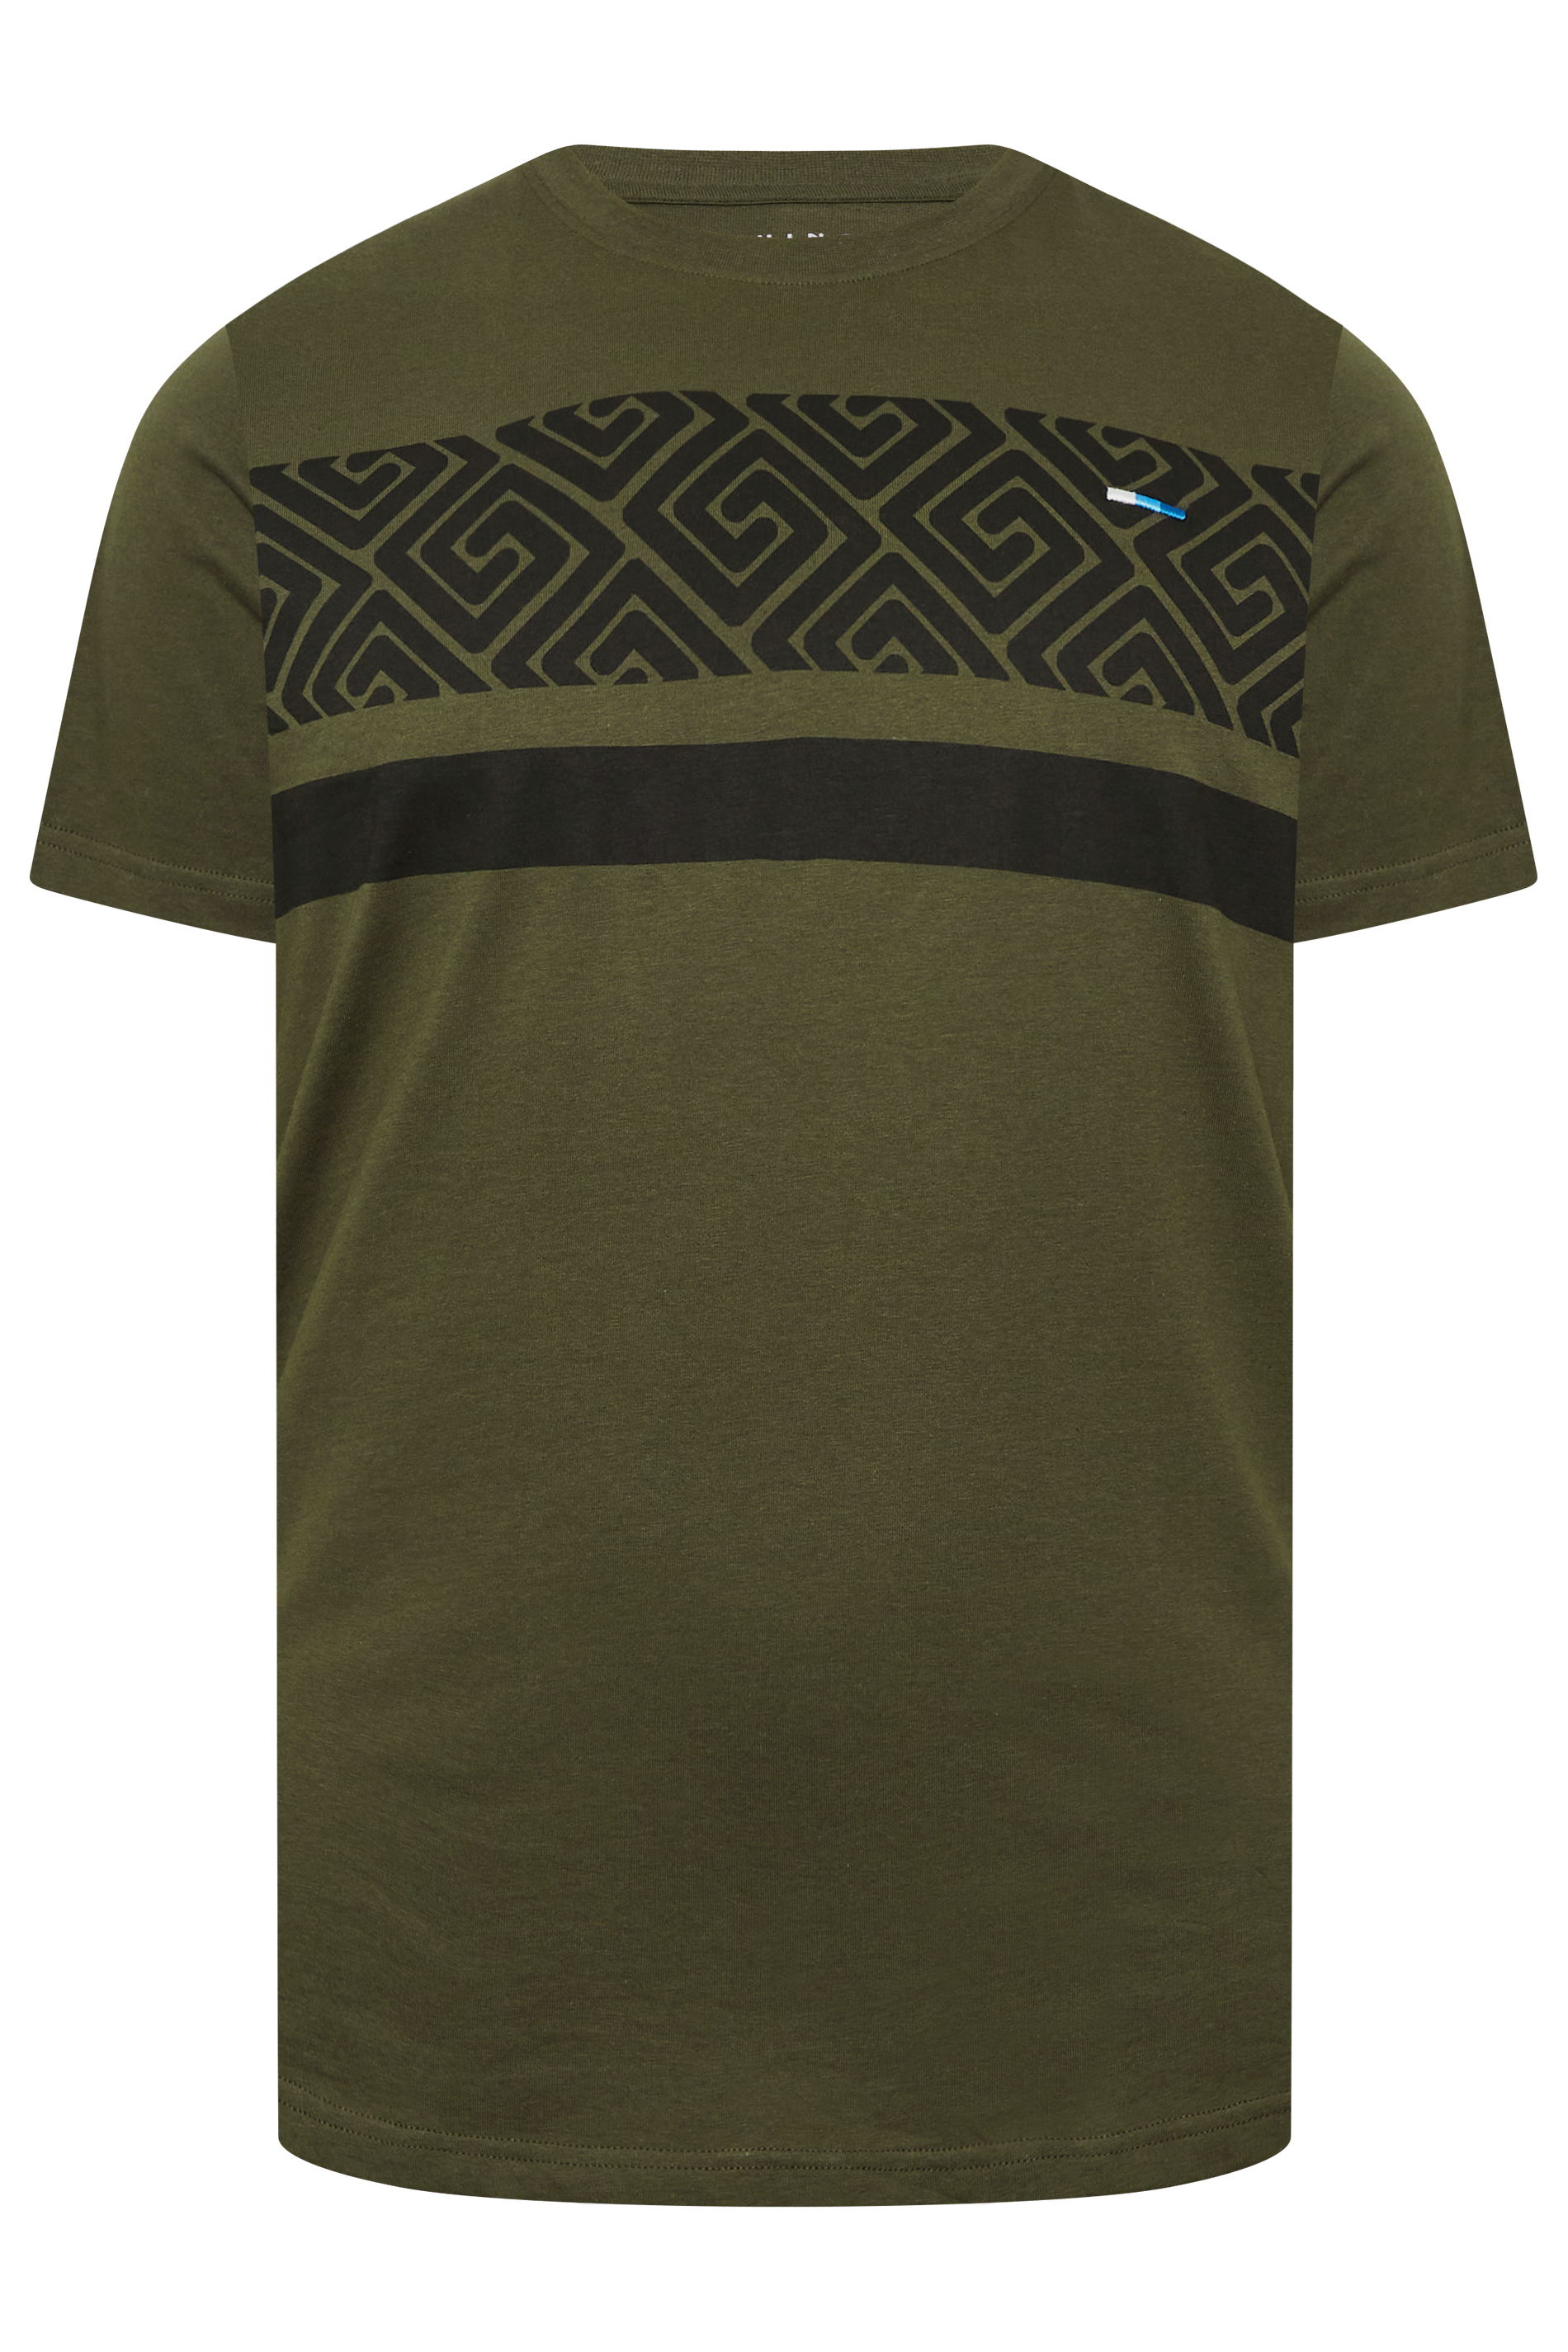 BadRhino Big & Tall Khaki Green Aztec Print T-Shirt | BadRhino 3